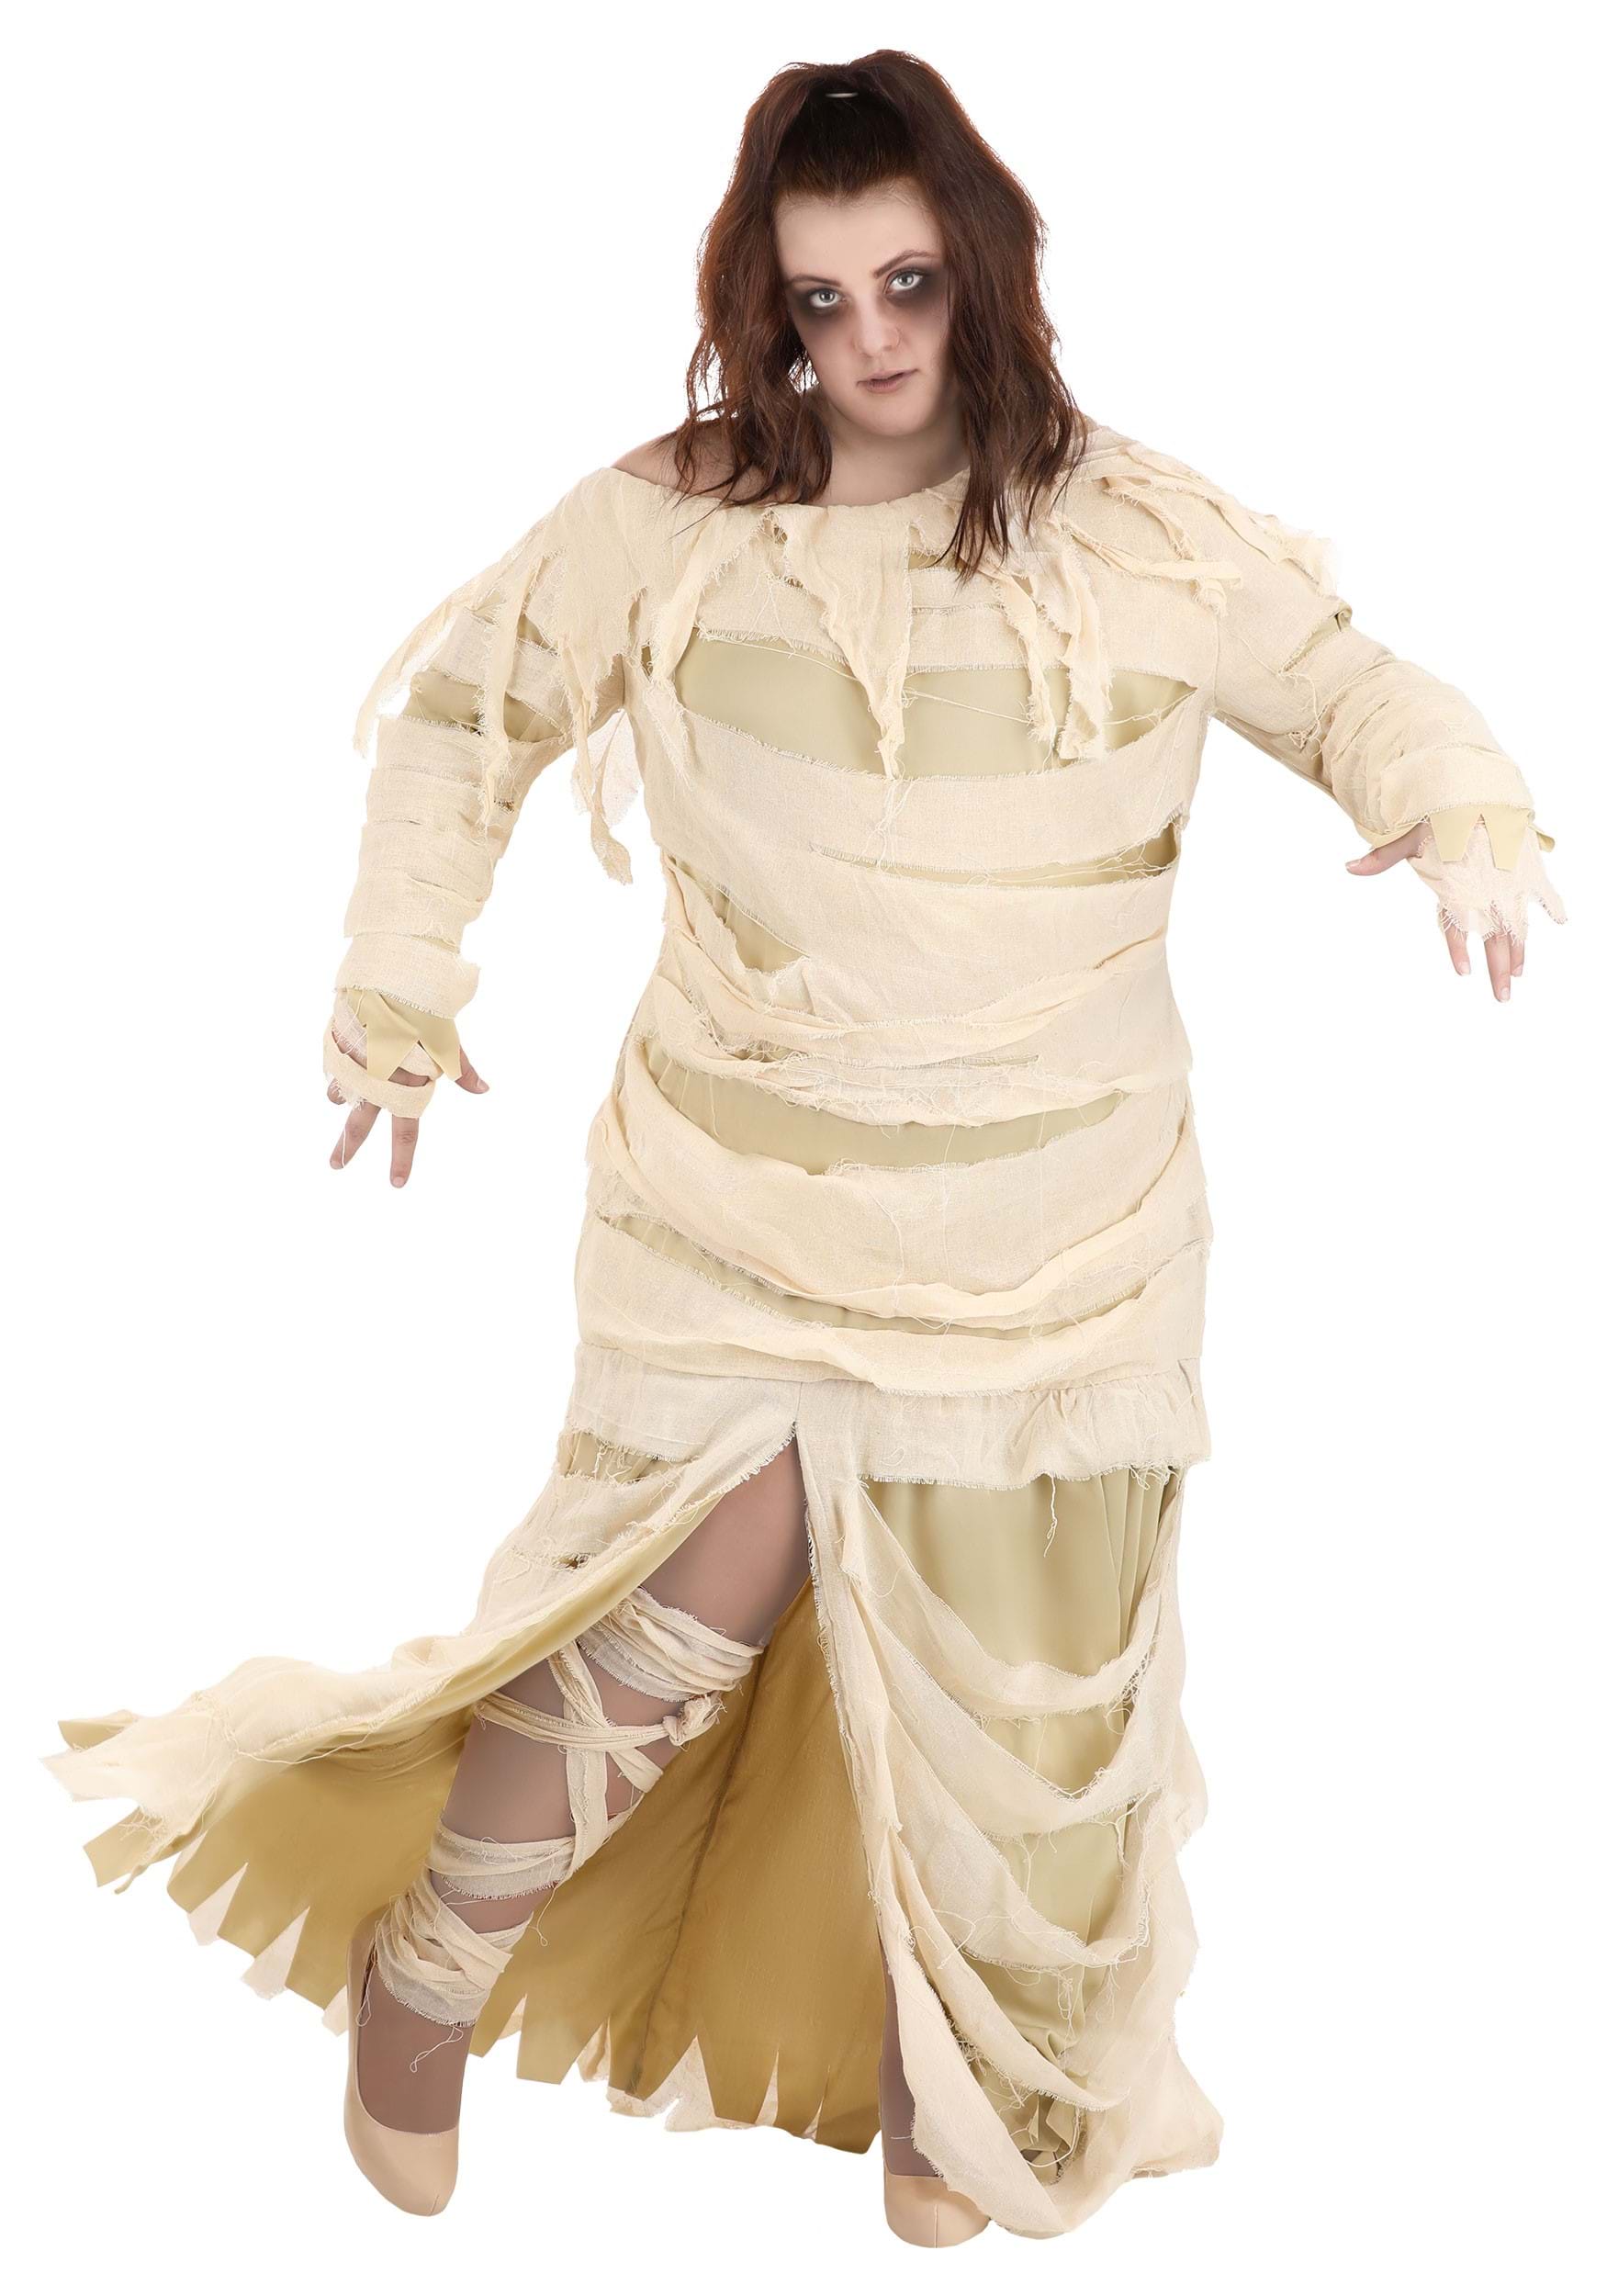 Plus Size Full Length Mummy Women's Costume